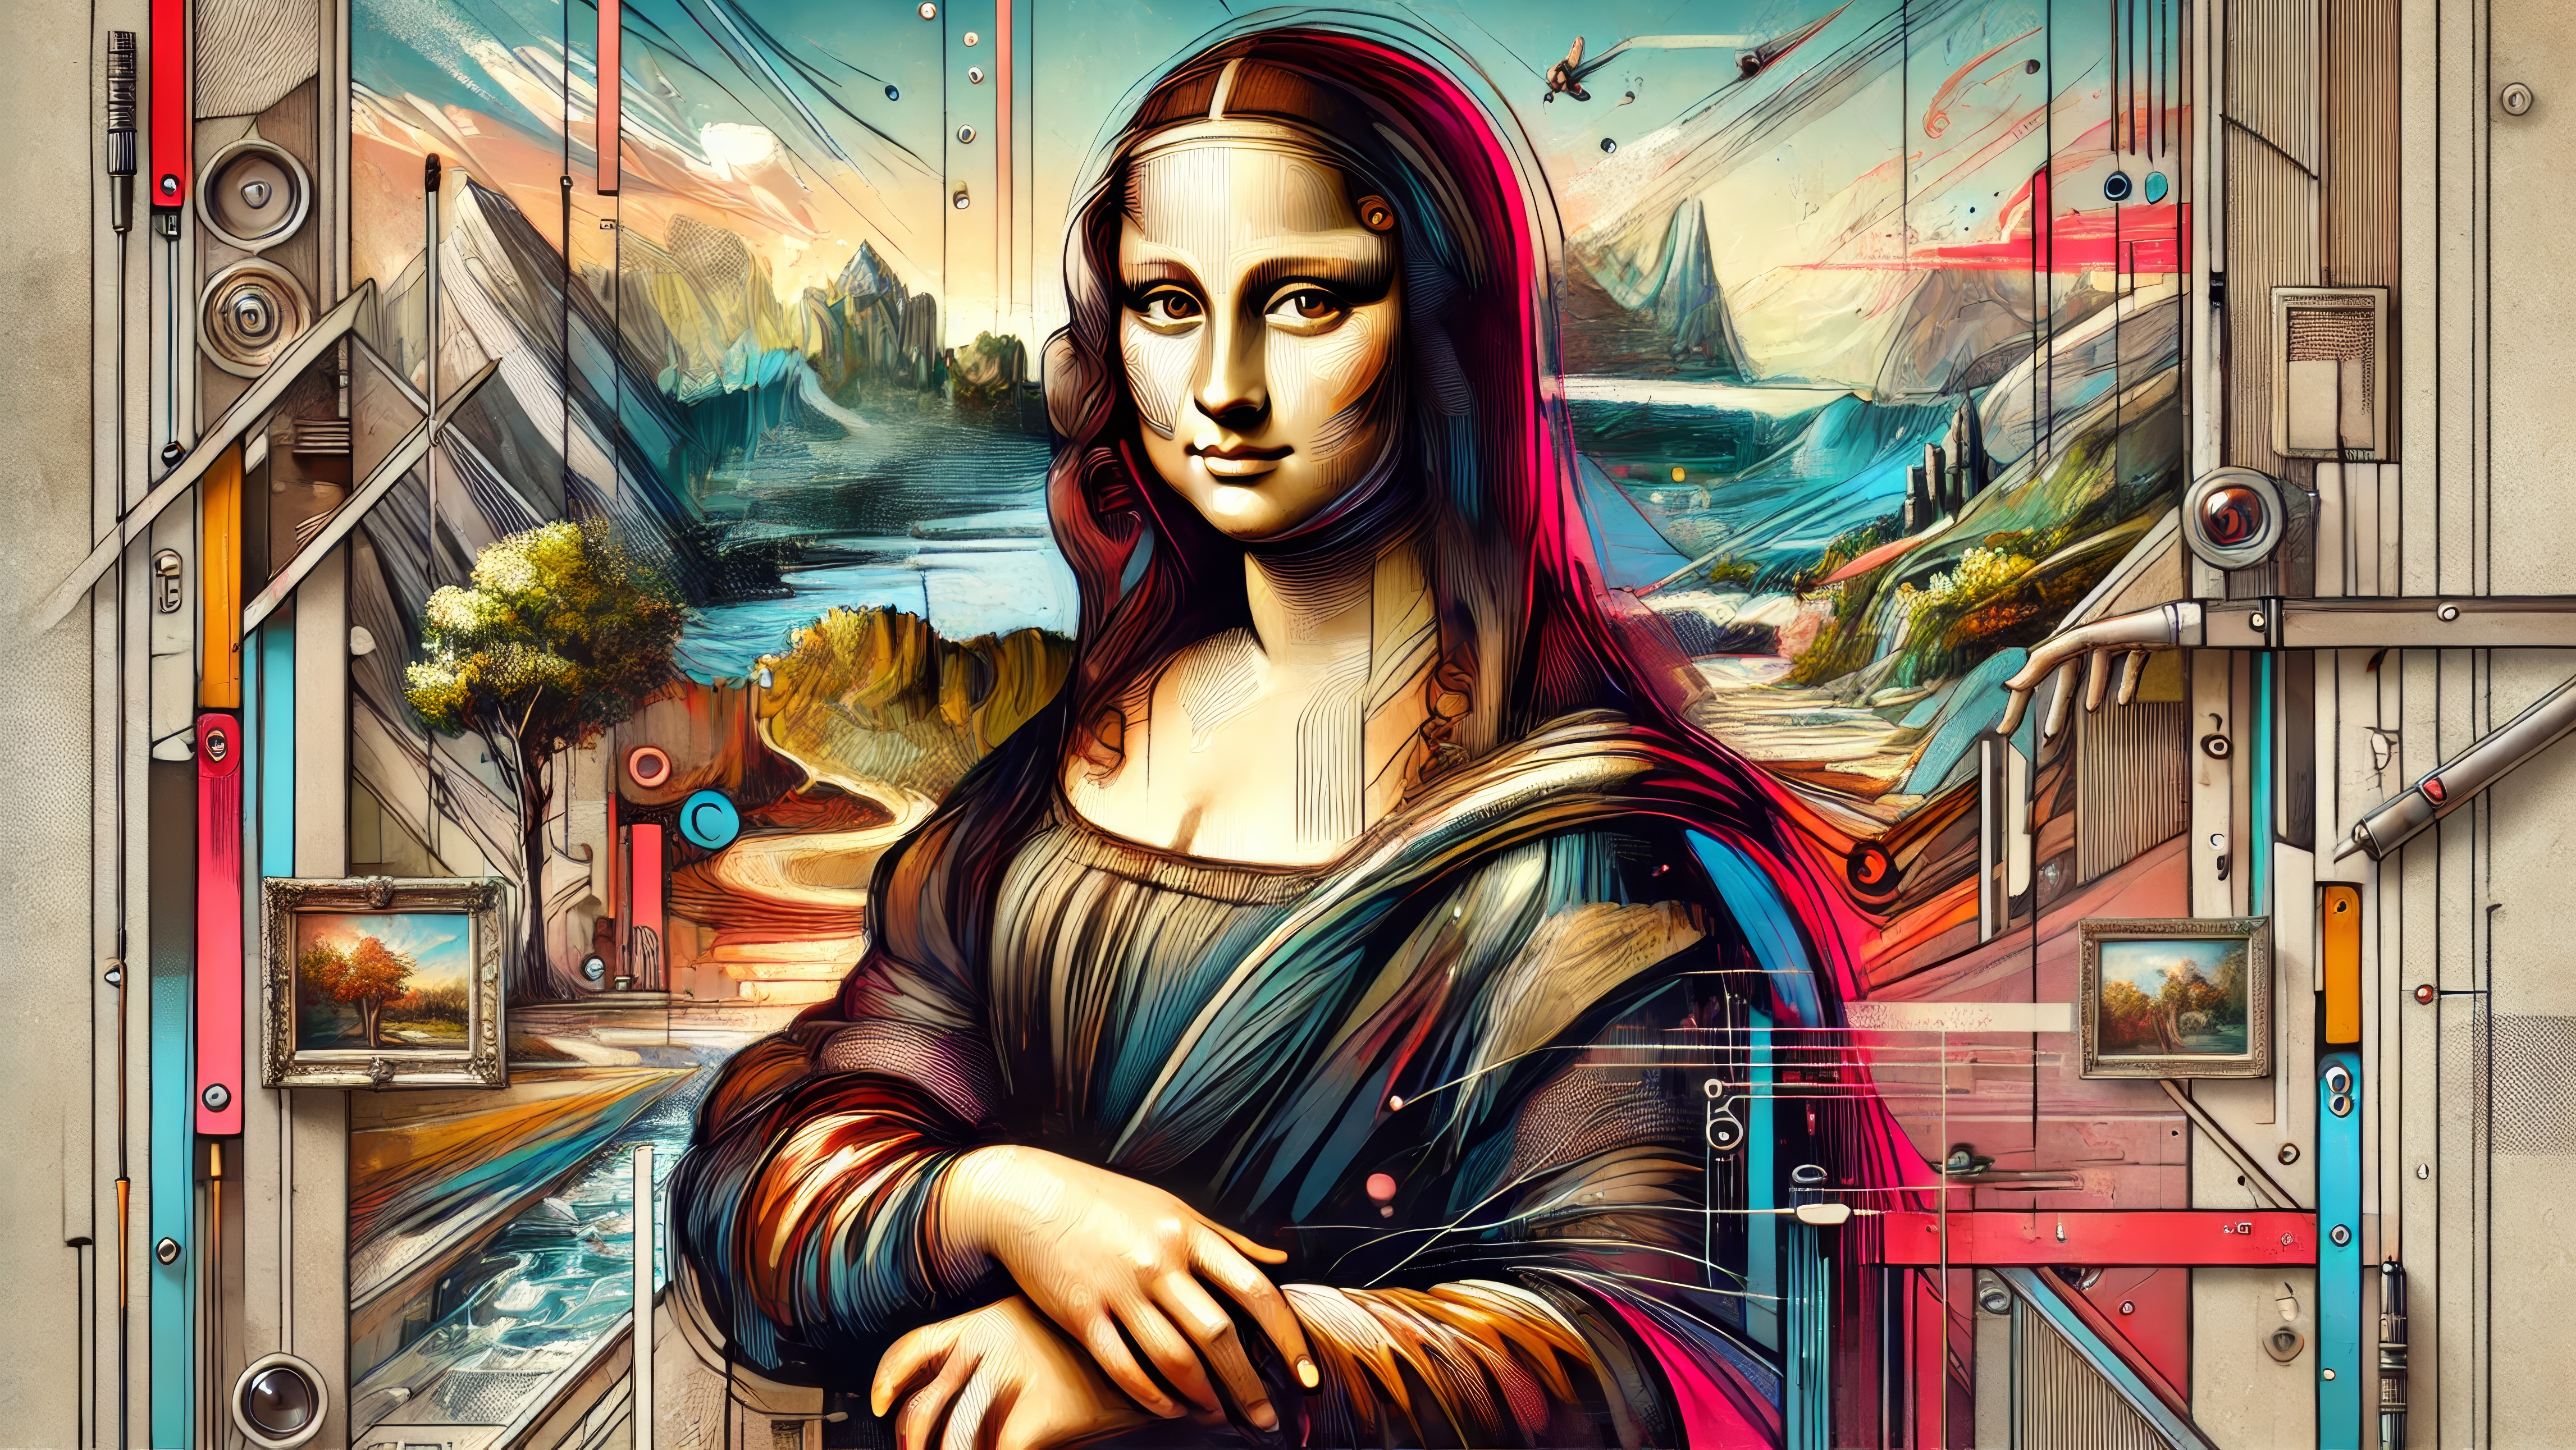 General 4588x2583 Leonardo da Vinci Mona Lisa AI art concept art